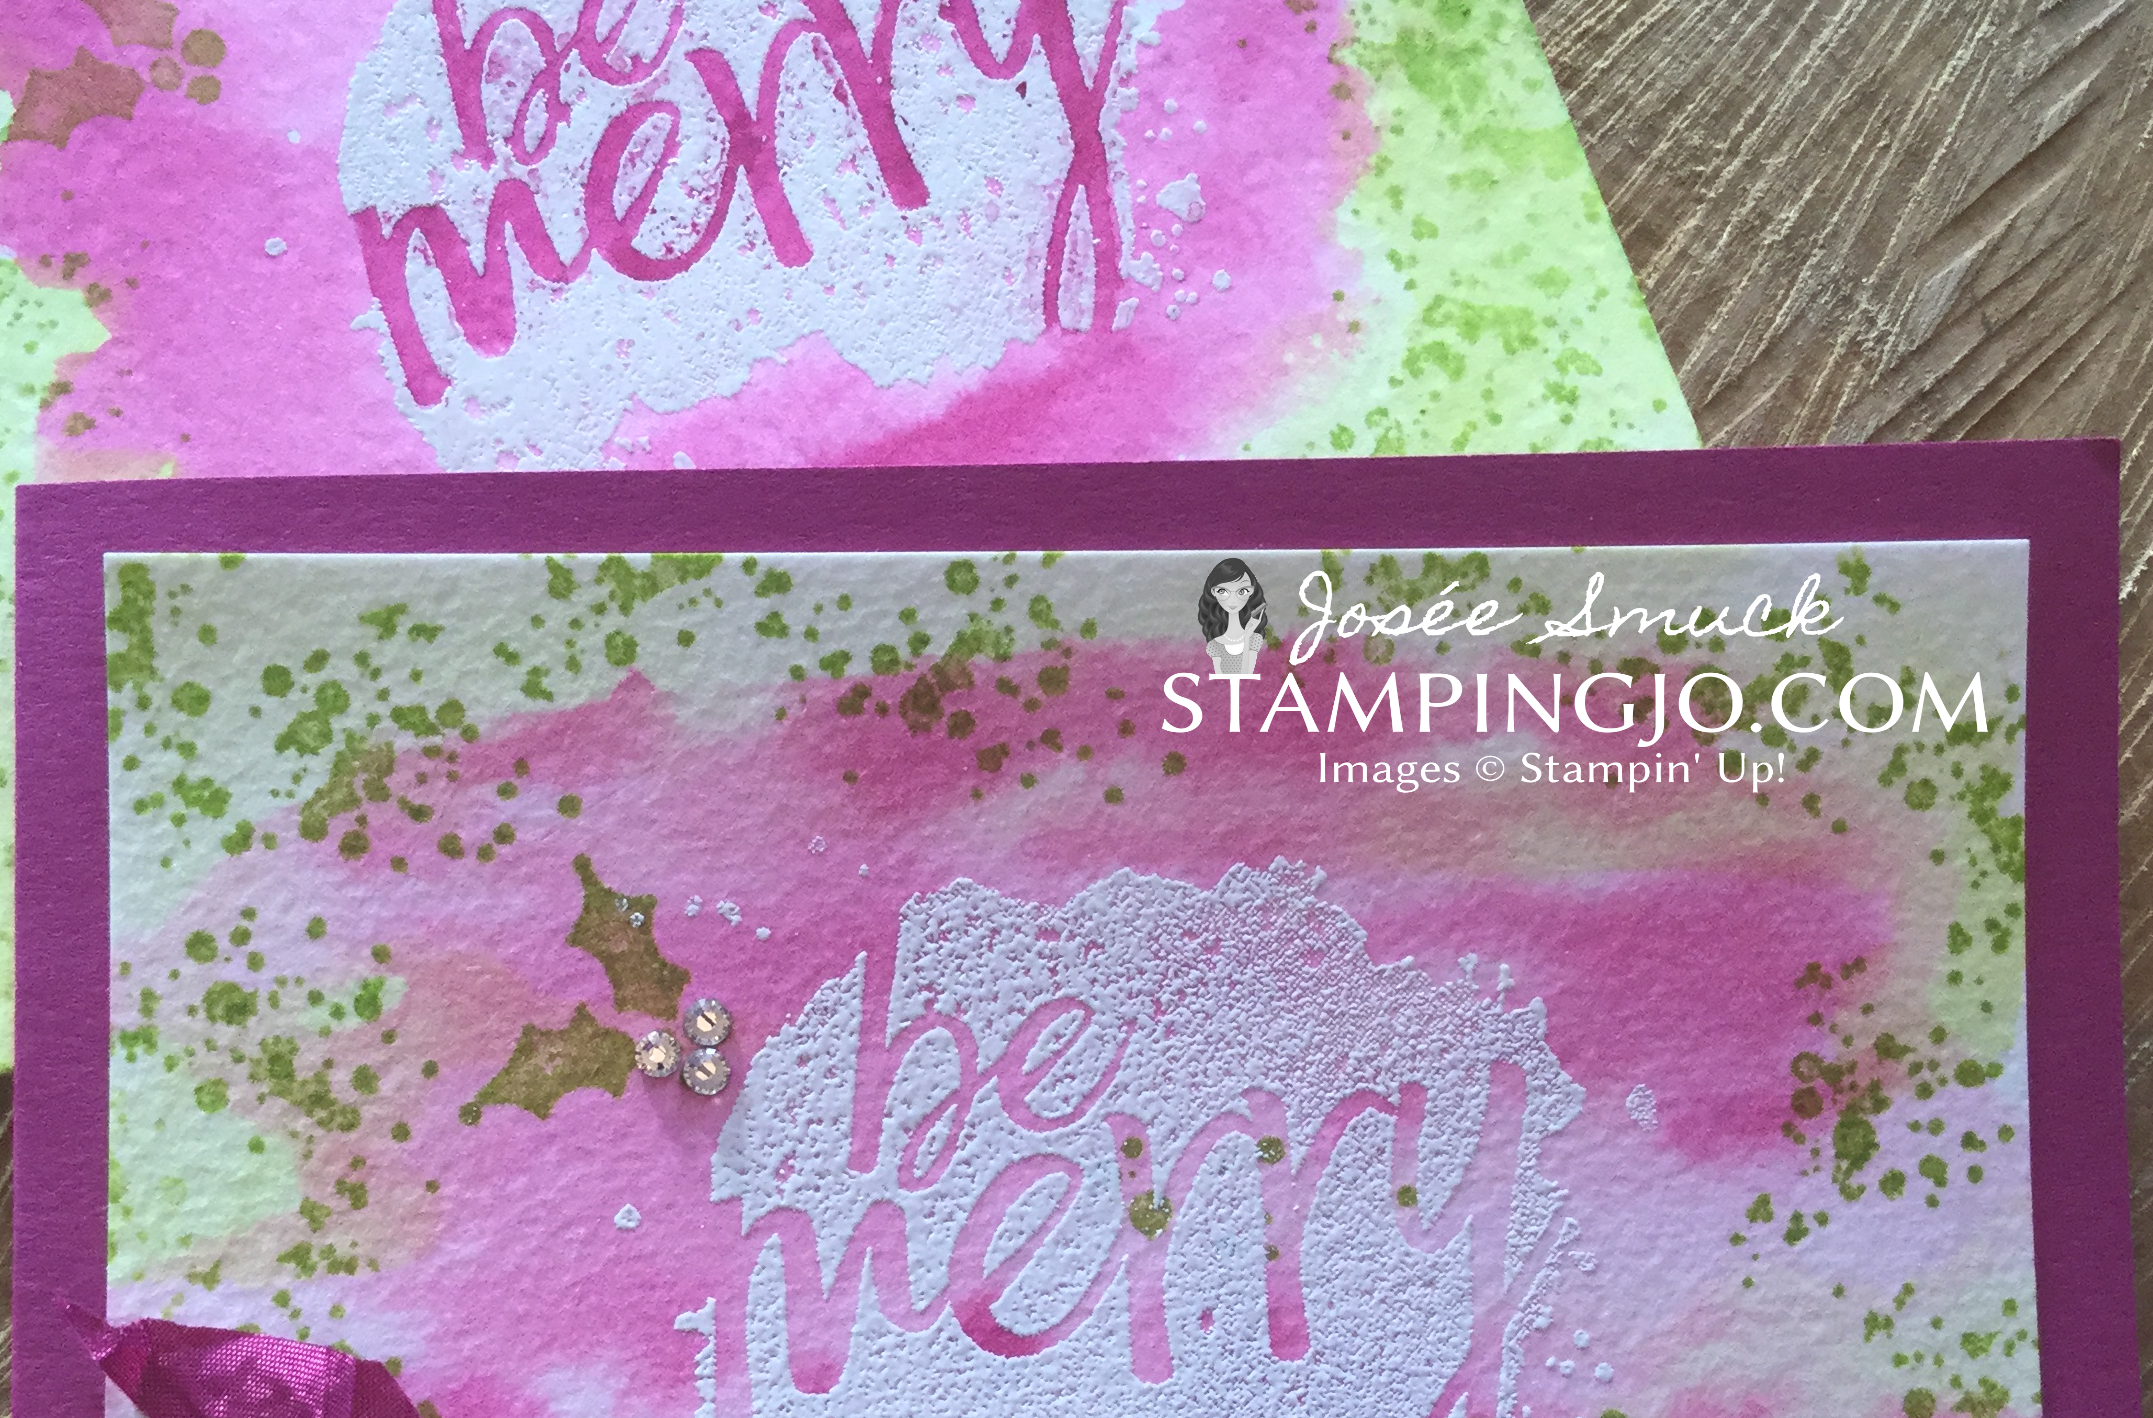 watercoloring and emboss resist stampin up card 1